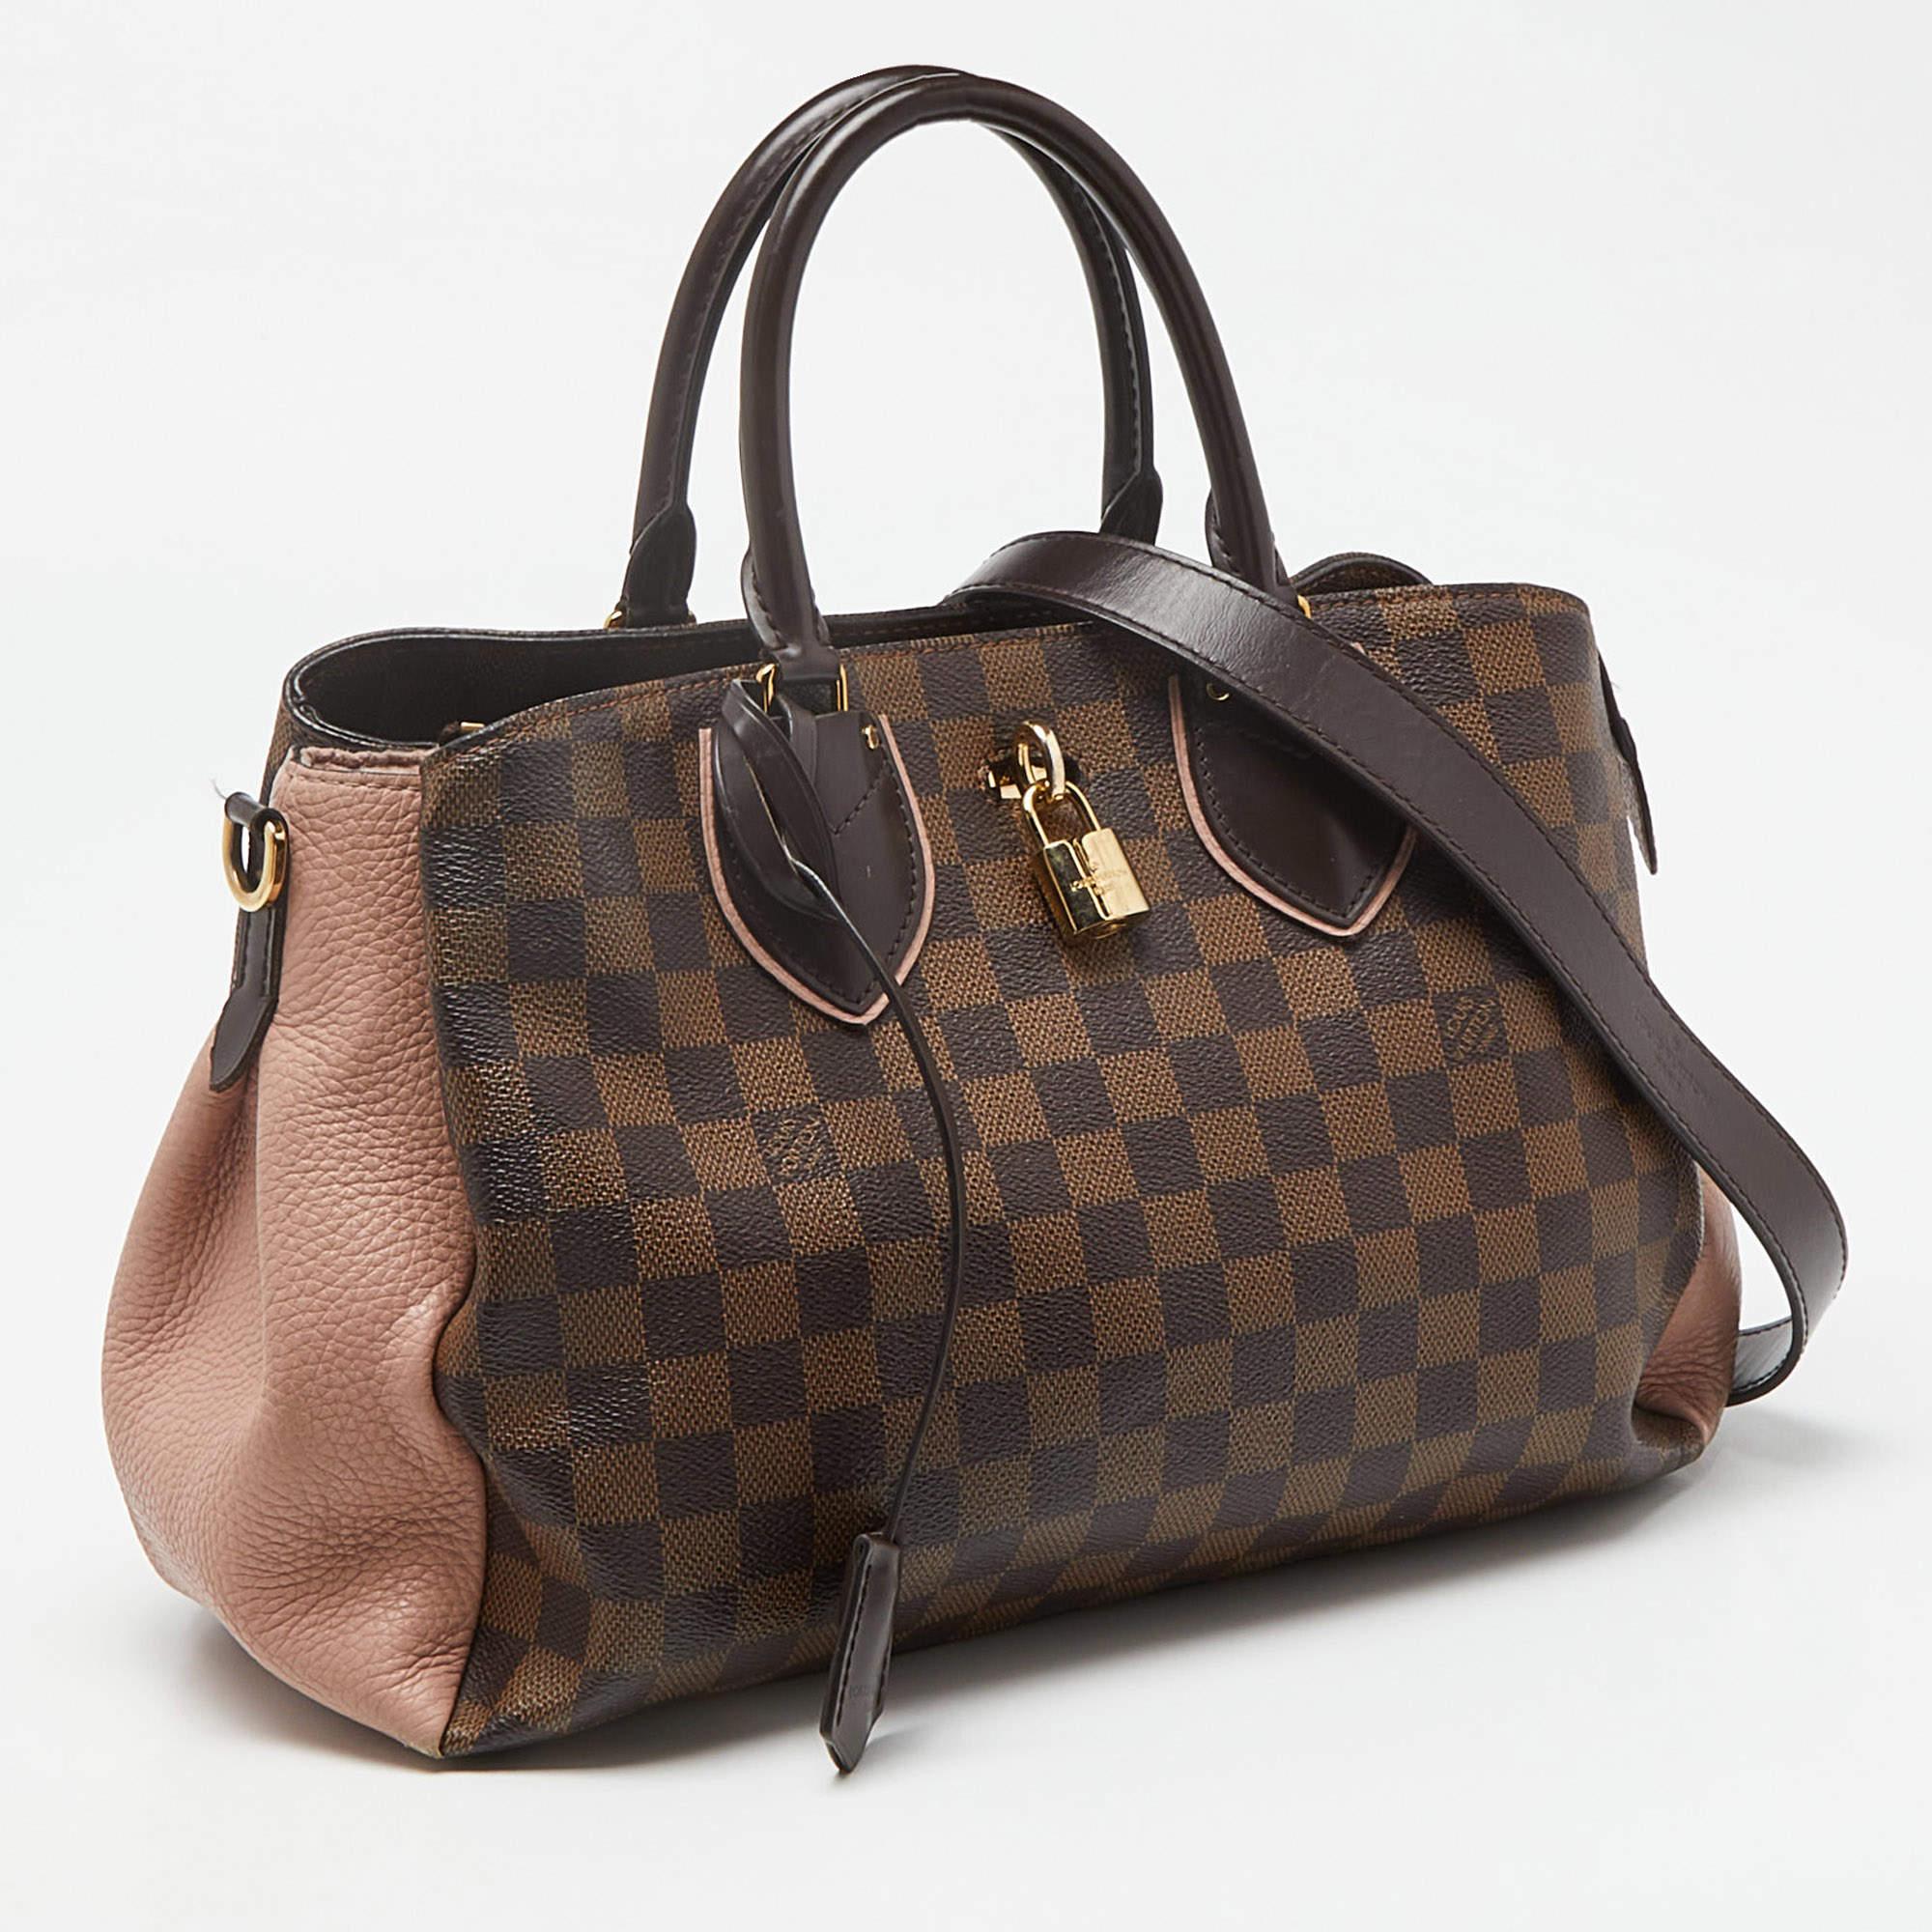 Louis Vuitton Damier Ebene Canvas and Leather Normandy Bag In Good Condition For Sale In Dubai, Al Qouz 2